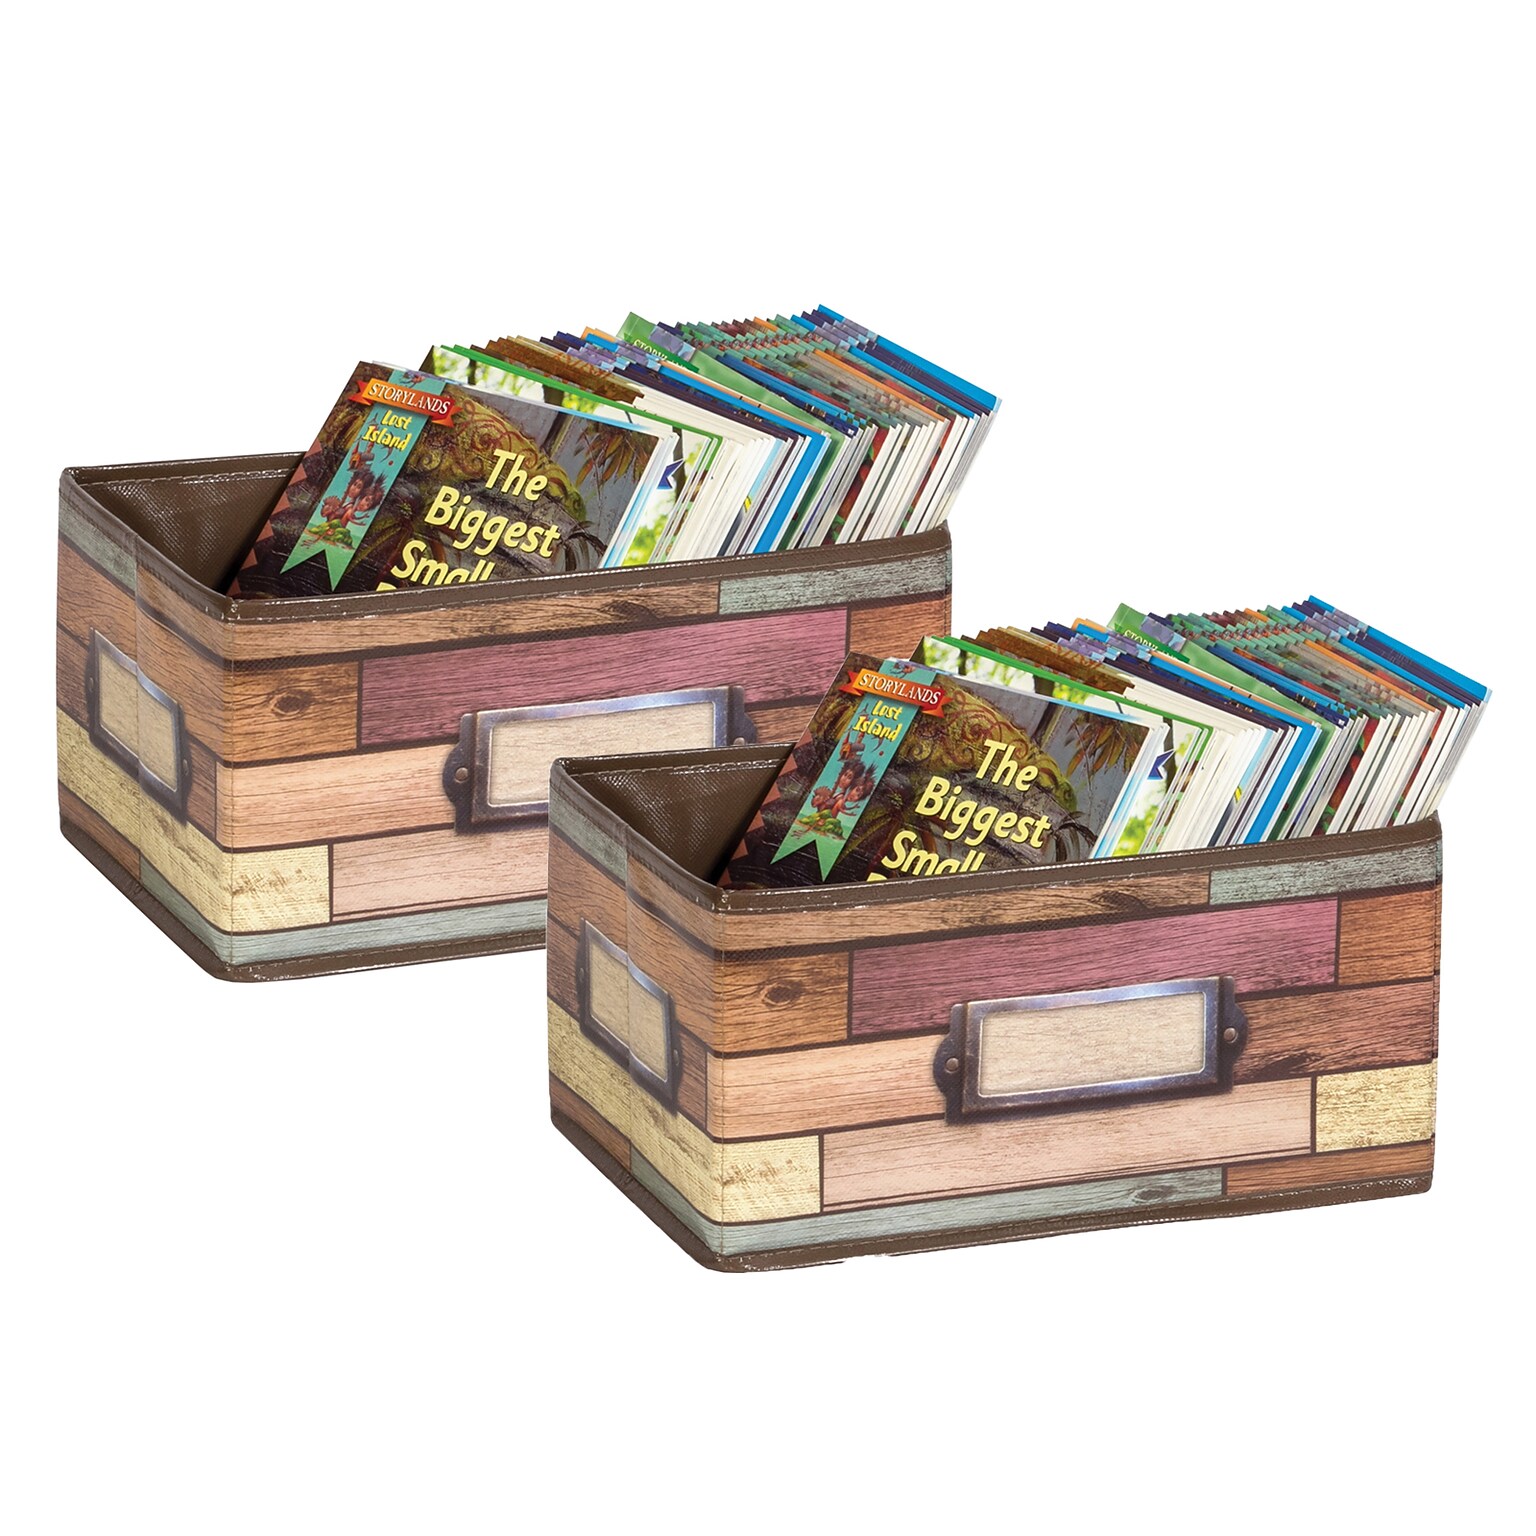 Teacher Created Resources Vinyl Storage Bin, 8 x 11 x 5, Reclaimed Wood Design, Pack of 2 (TCR20913-2)